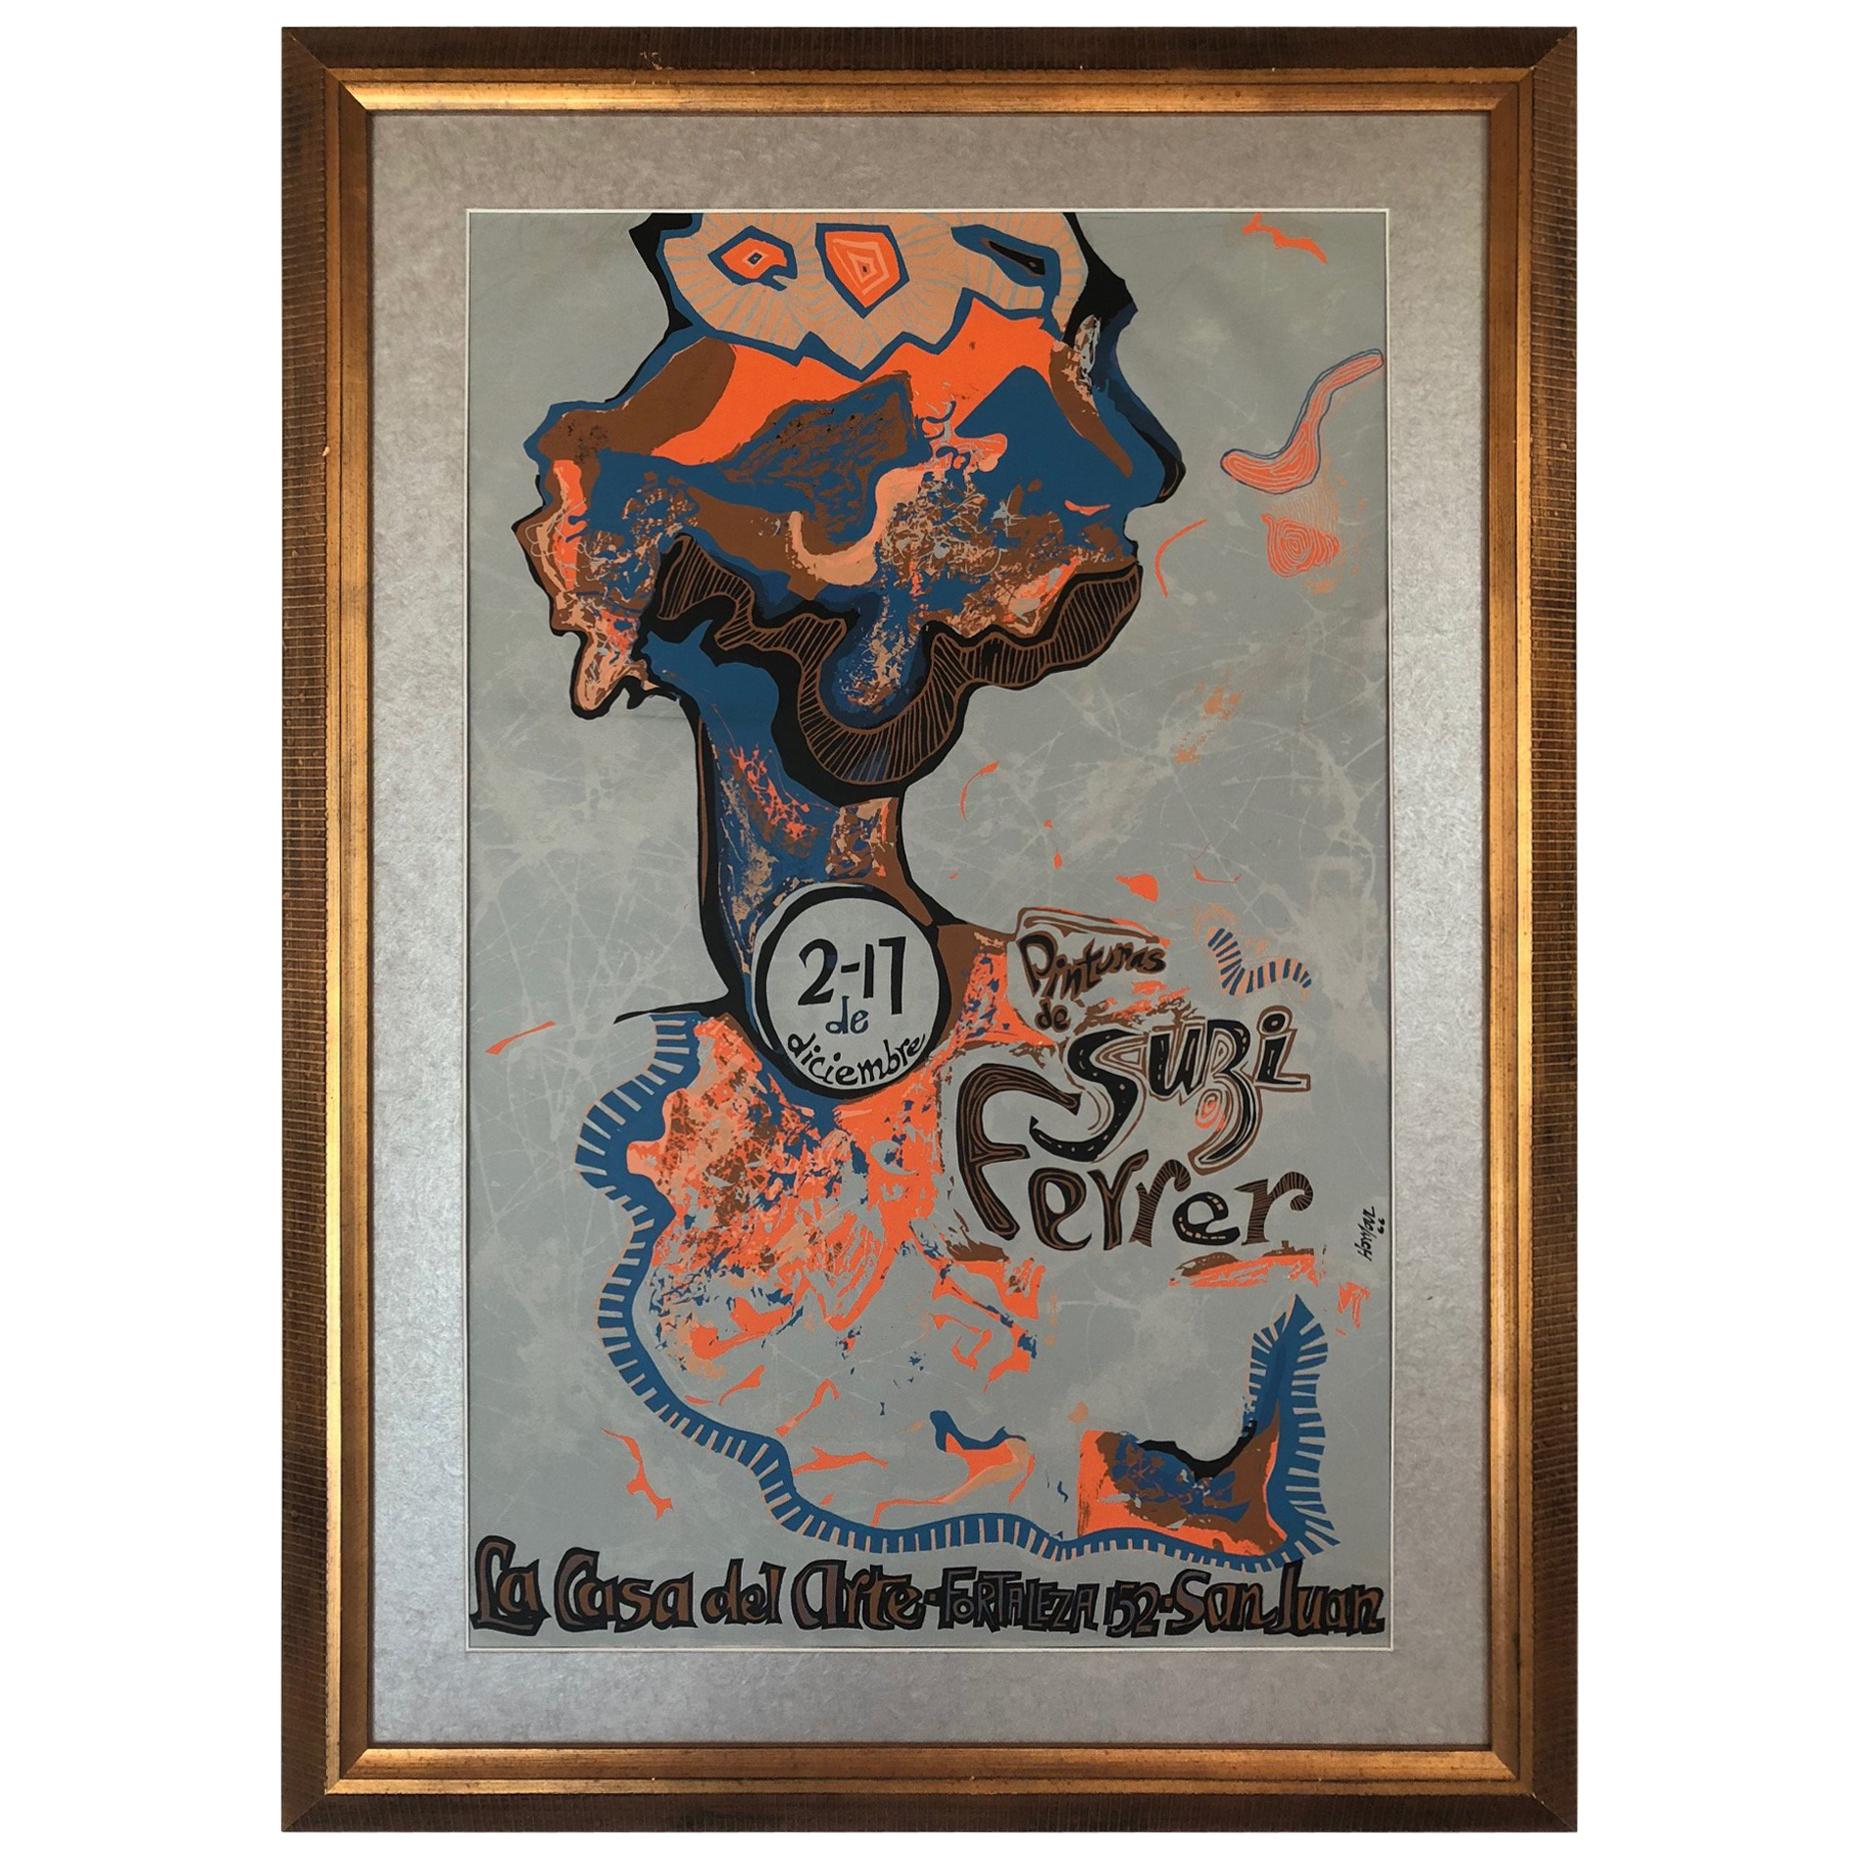 Suzi Ferrer Abstract Expressionist Silkscreen by Lorenzo Homov, 1966